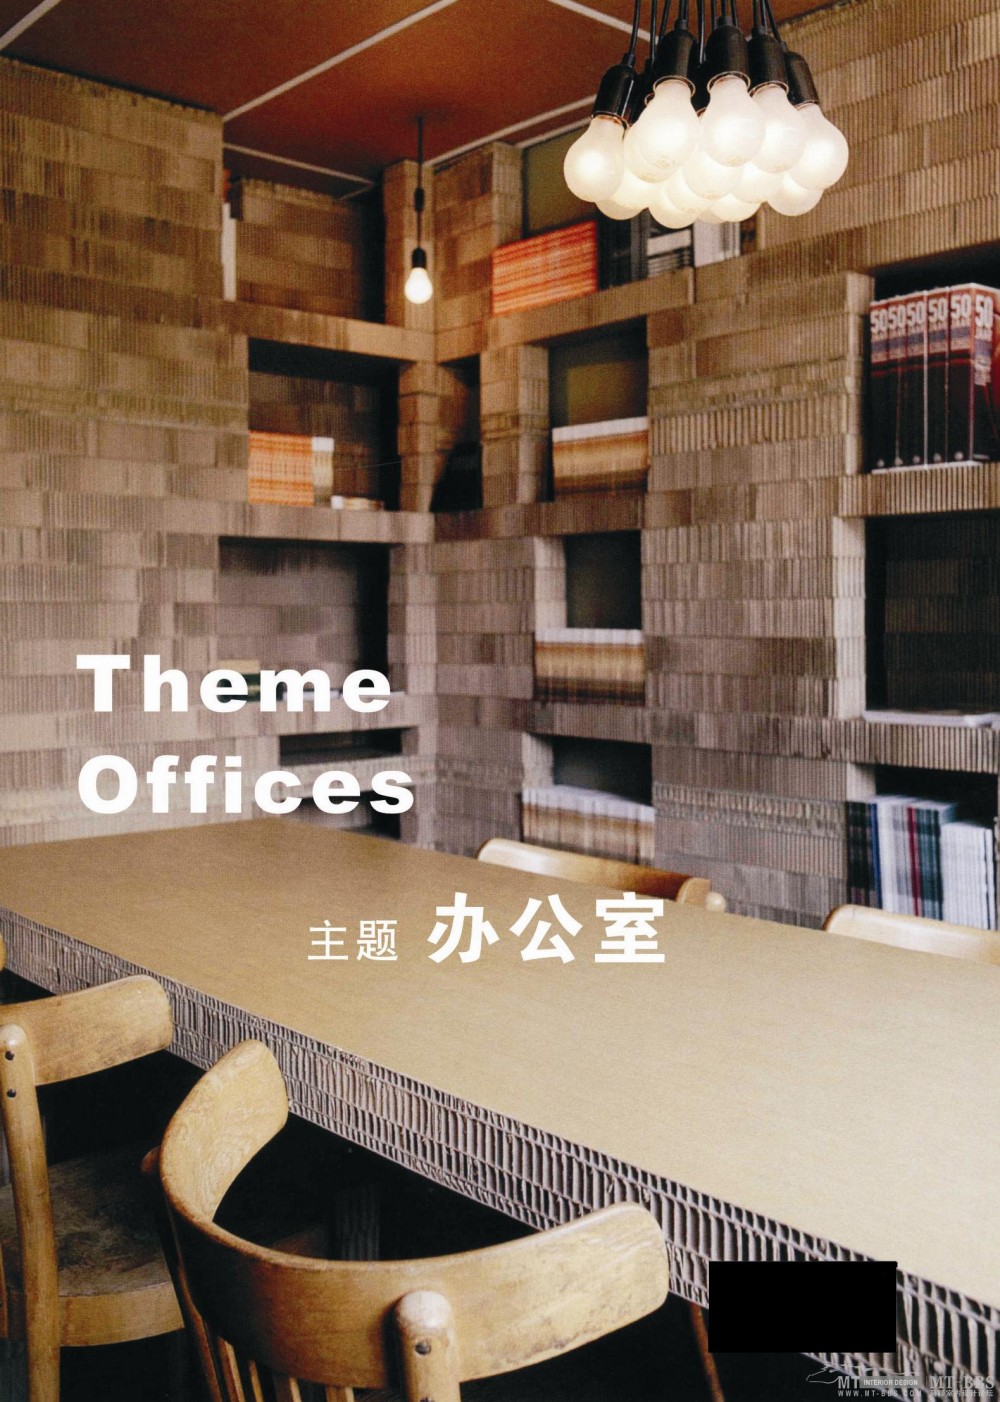 Theme offices 主题办公室(享分享)_000(IMGART.COM).jpg